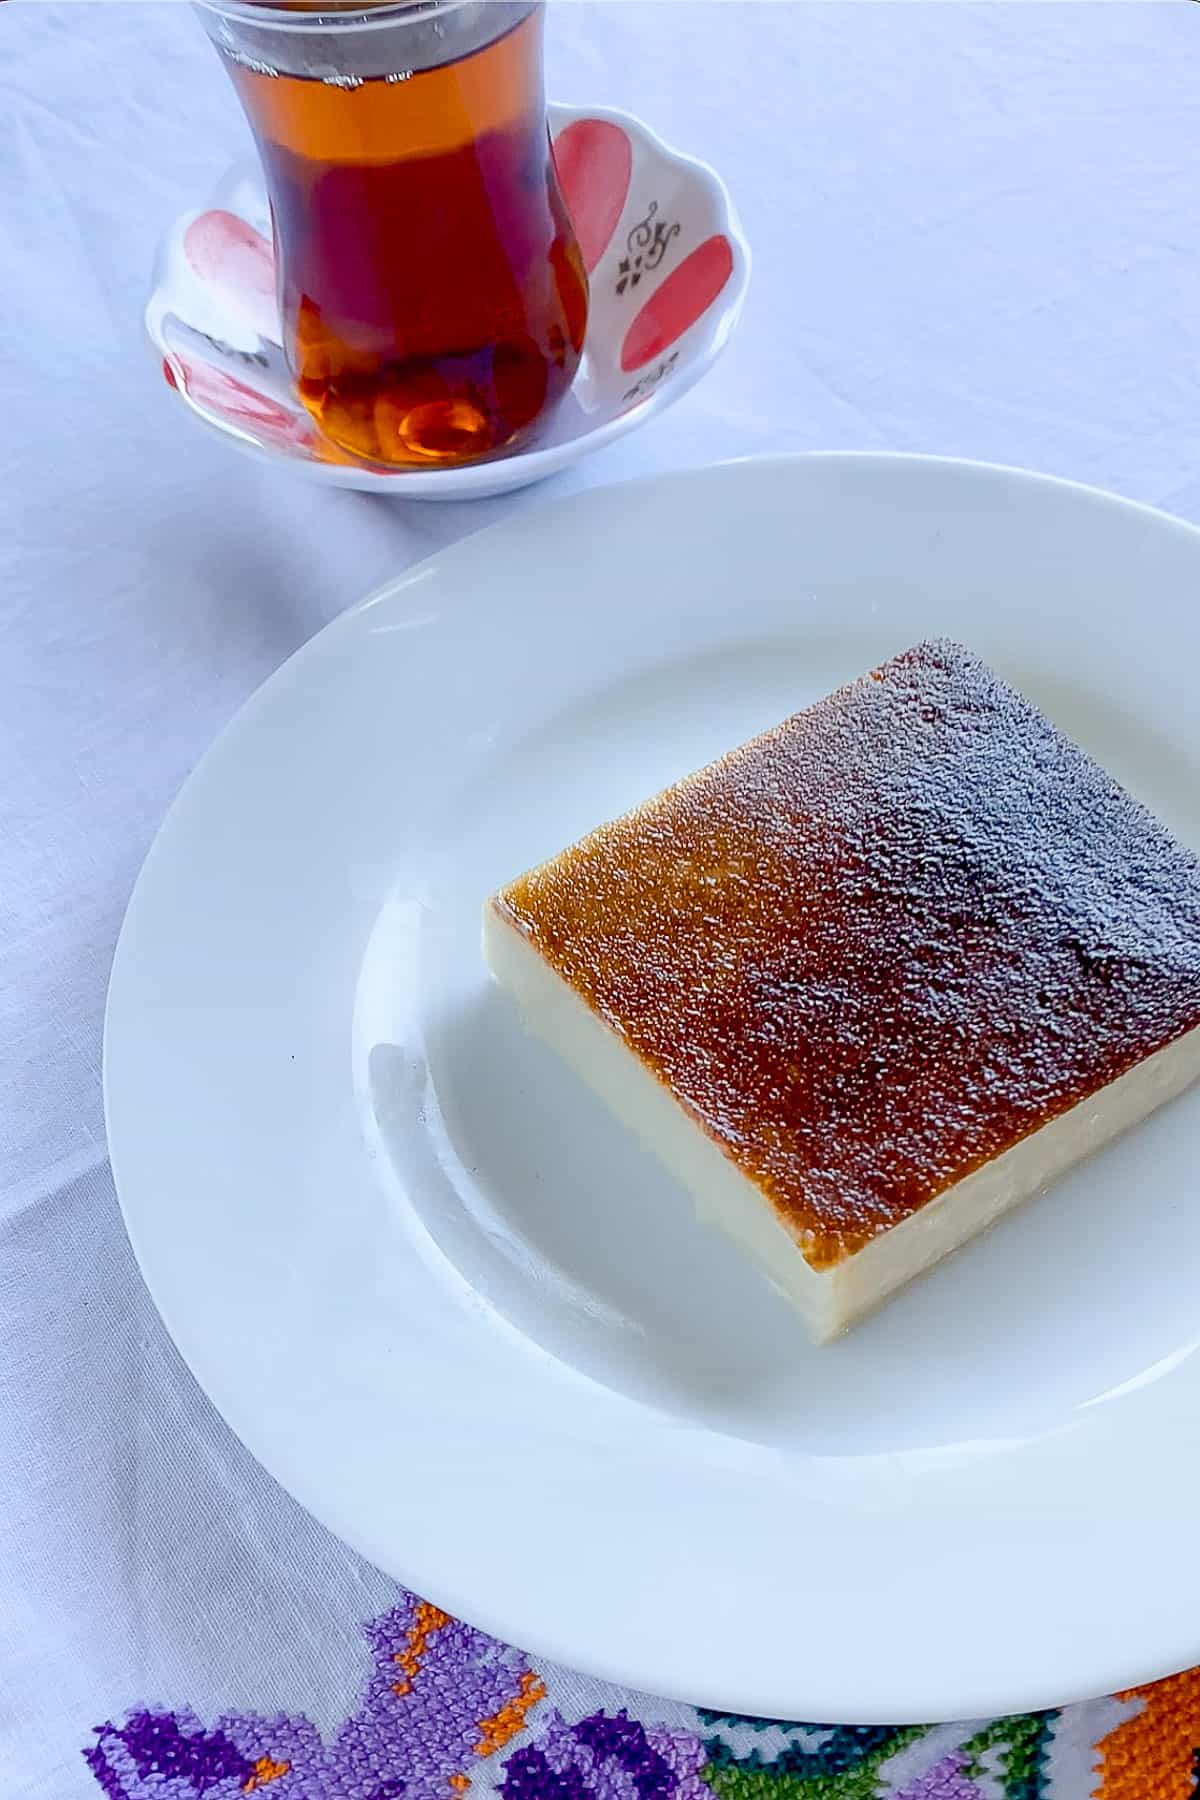 kazandibi with turkish tea